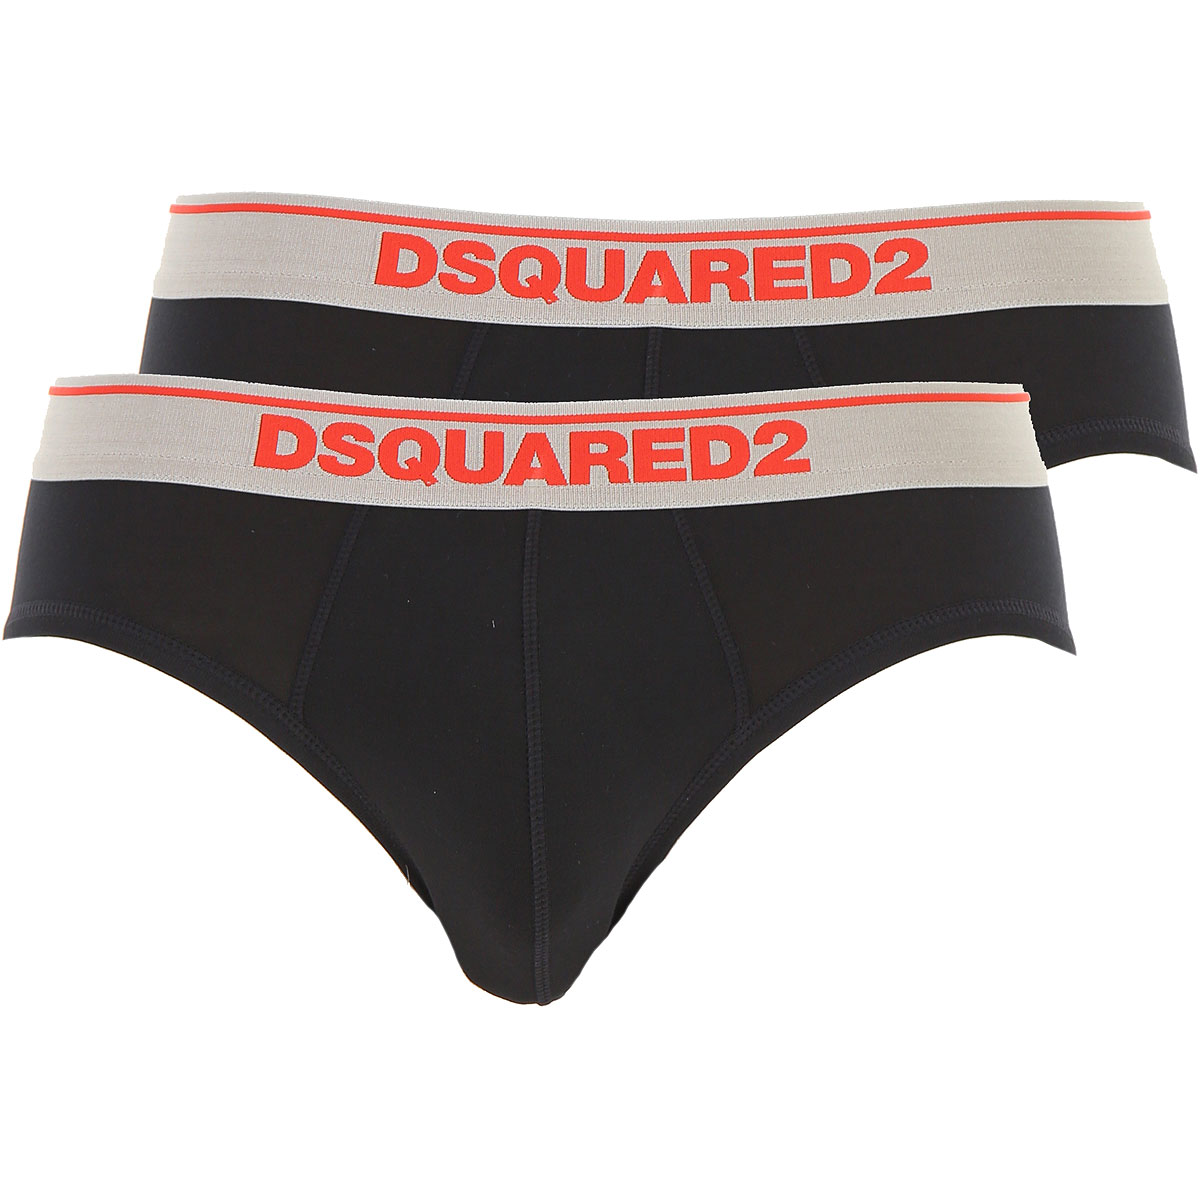 Mens Underwear Dsquared2, Style code: cont-dcx610050-001